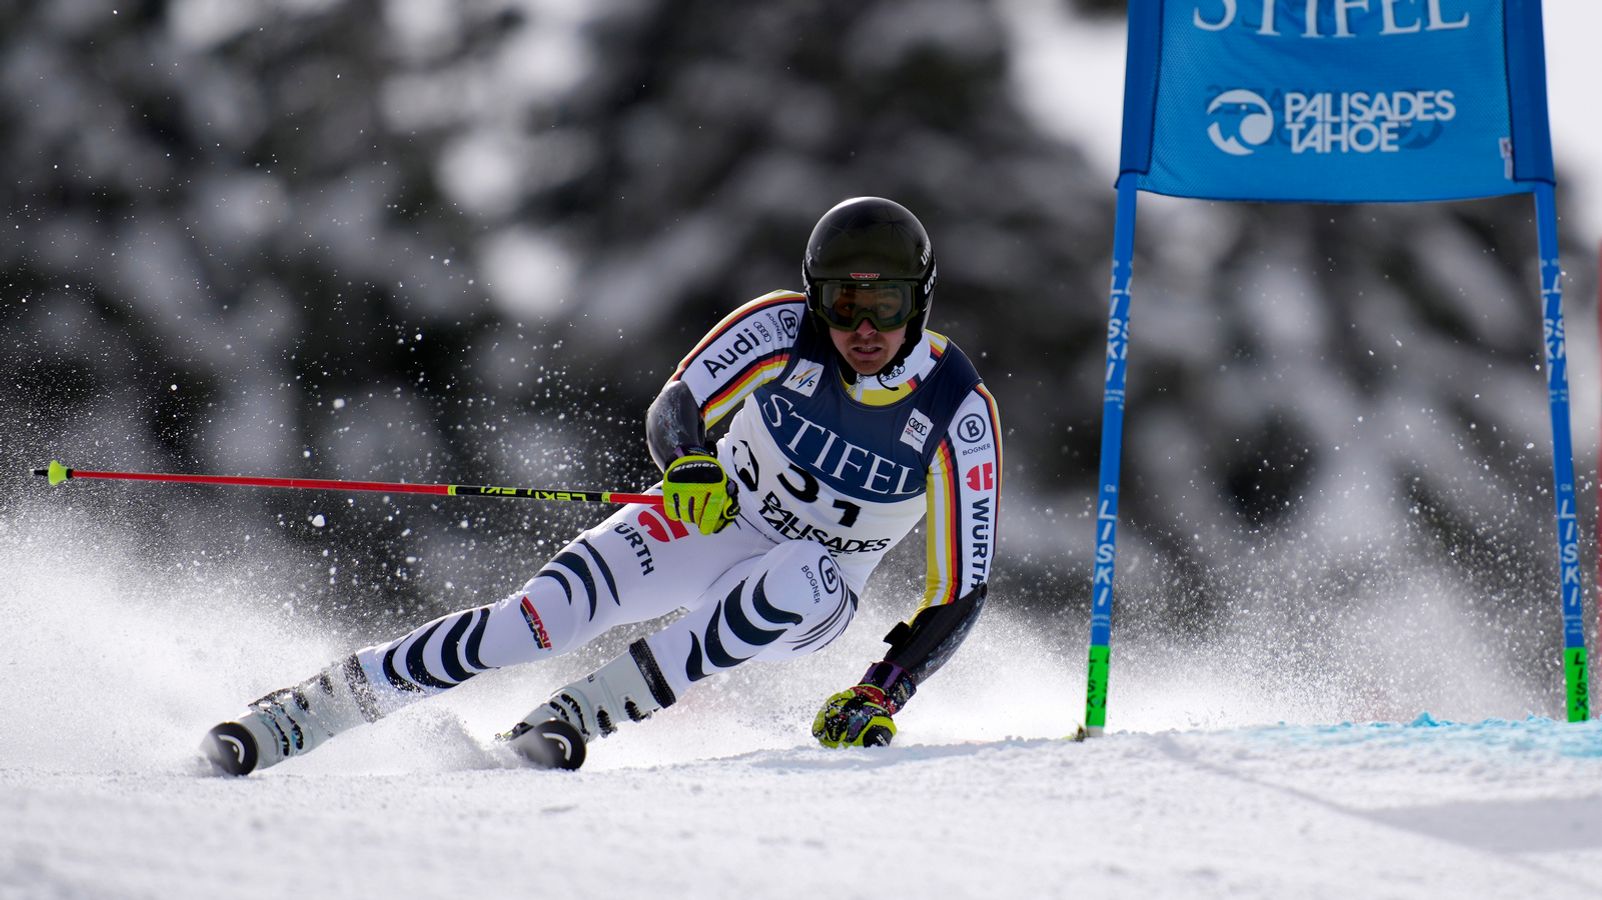 Ski racer Lowitz in the World Racing Team: “I’m having fun again”